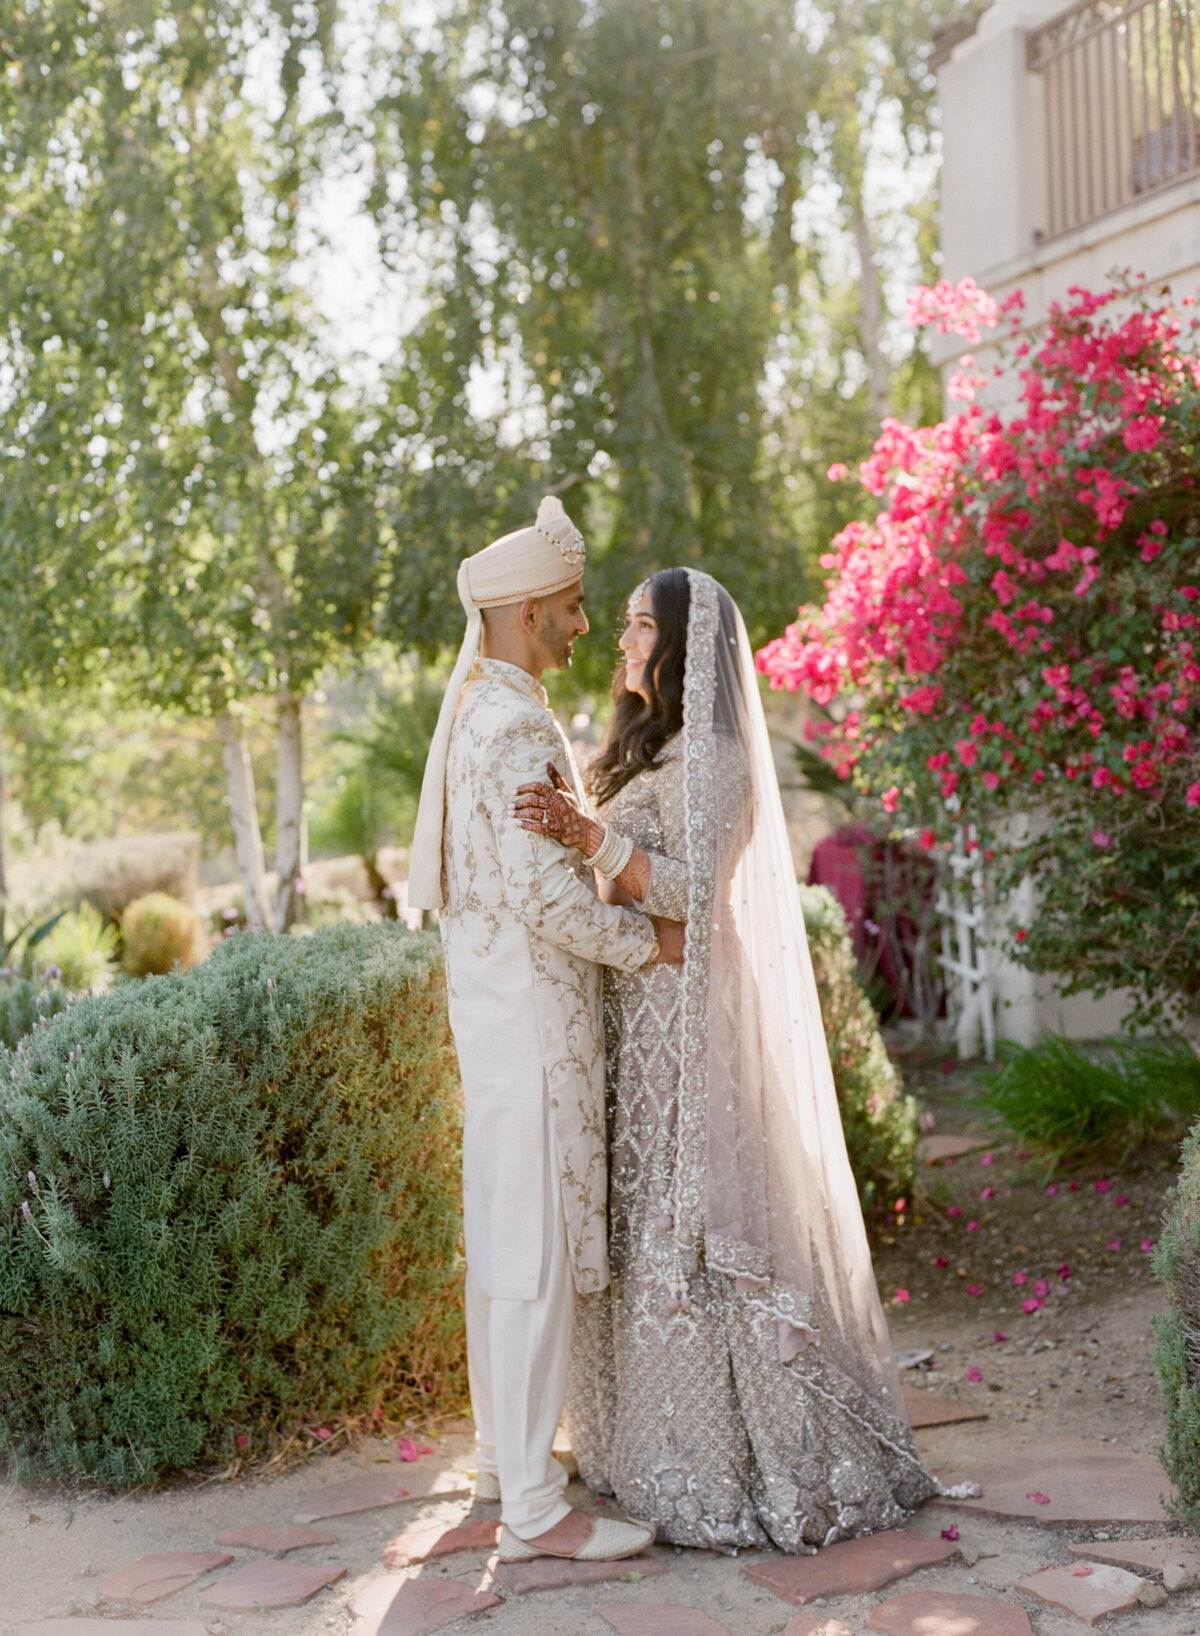 Shweta + Jeetu Morgan Hill California Wedding Cassie Valente Photography 0090